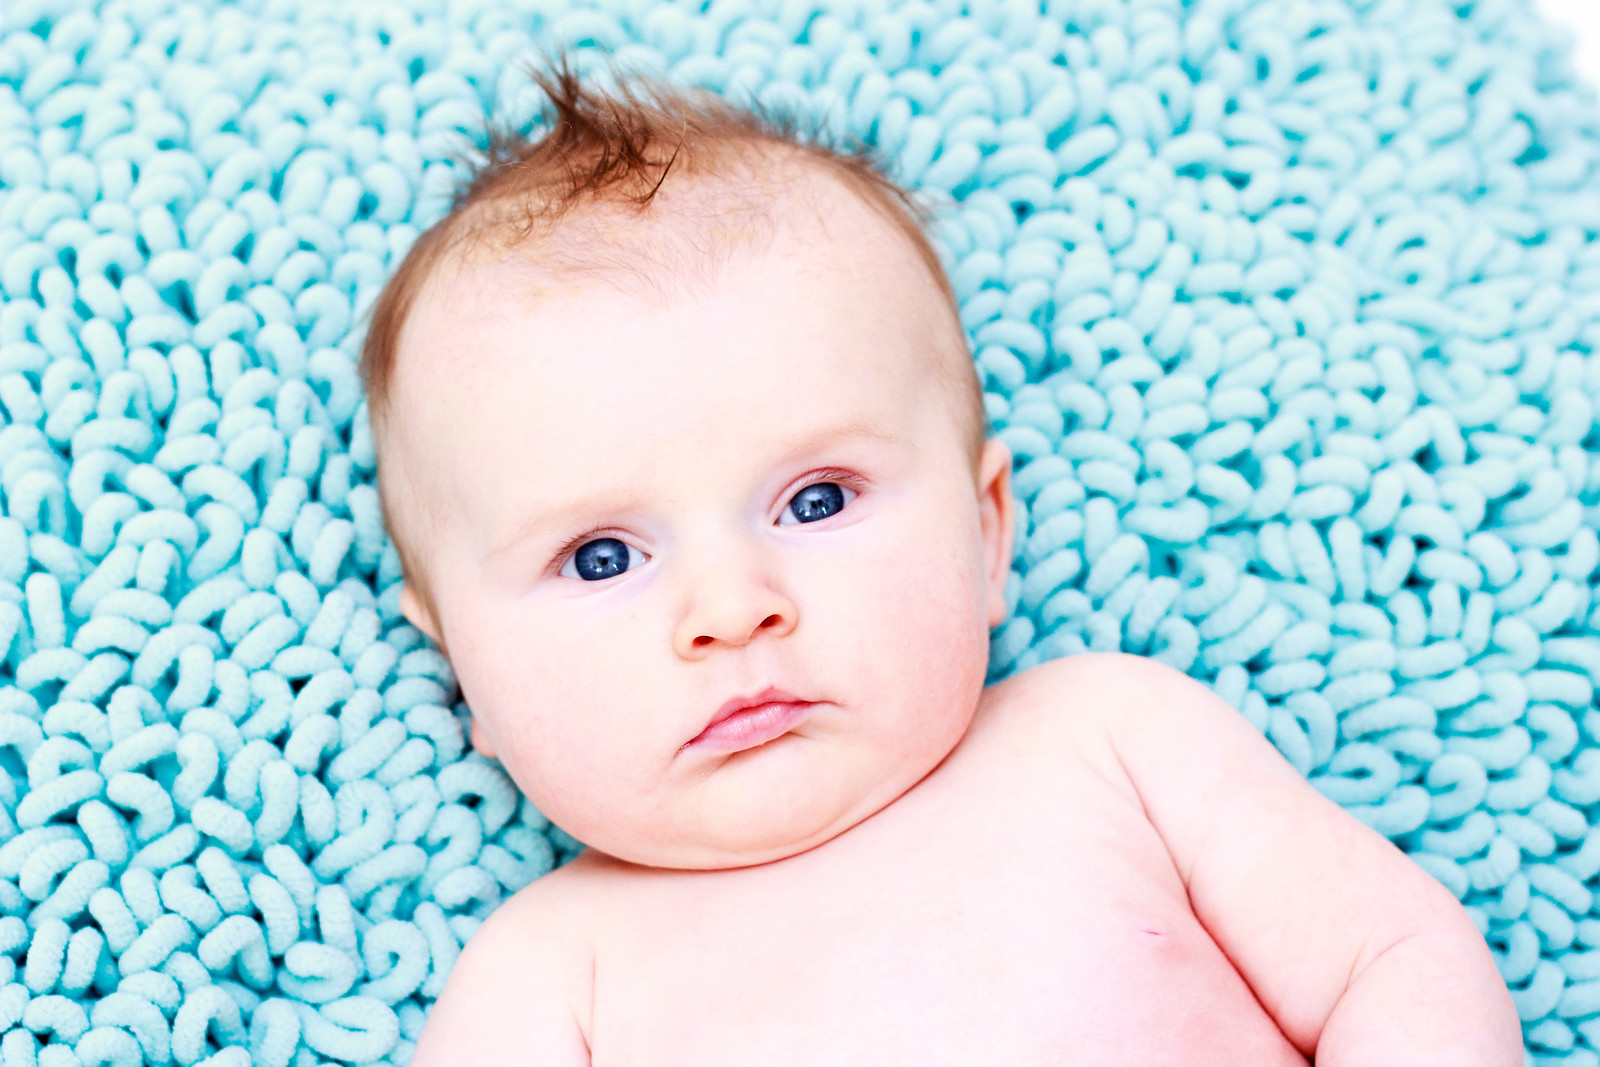 newborn photographer, baby photographer, adorable babies, beautiful babies, baby on a rug